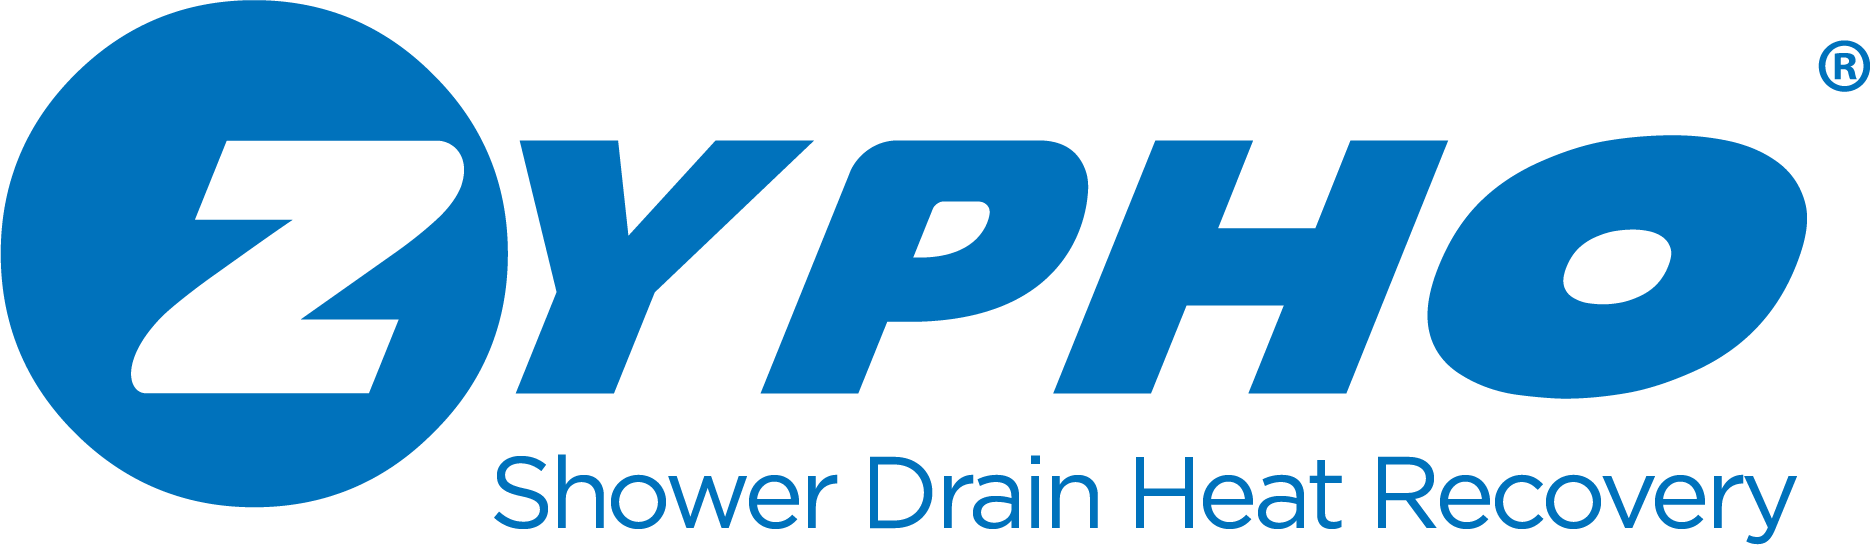 Zypho logo rekuperacja wody